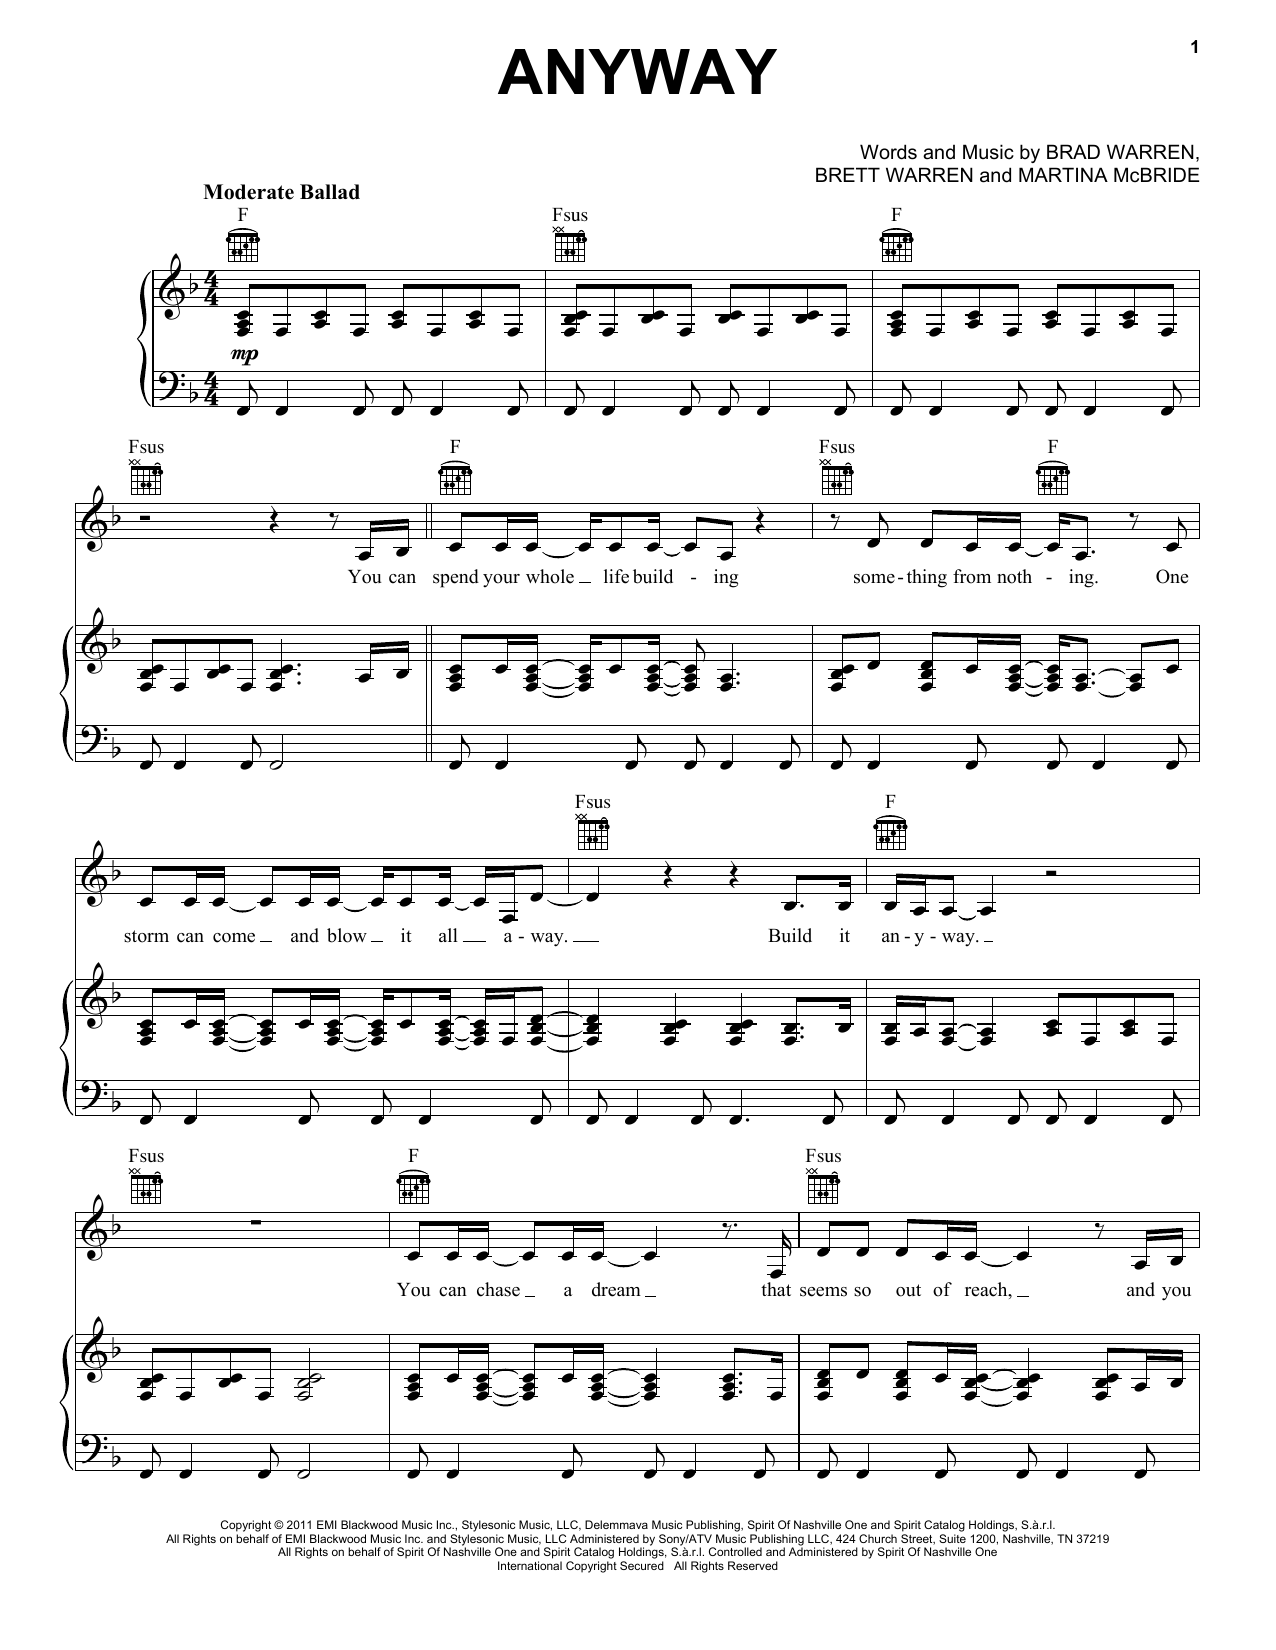 Martina McBride Anyway Sheet Music Notes & Chords for Piano (Big Notes) - Download or Print PDF